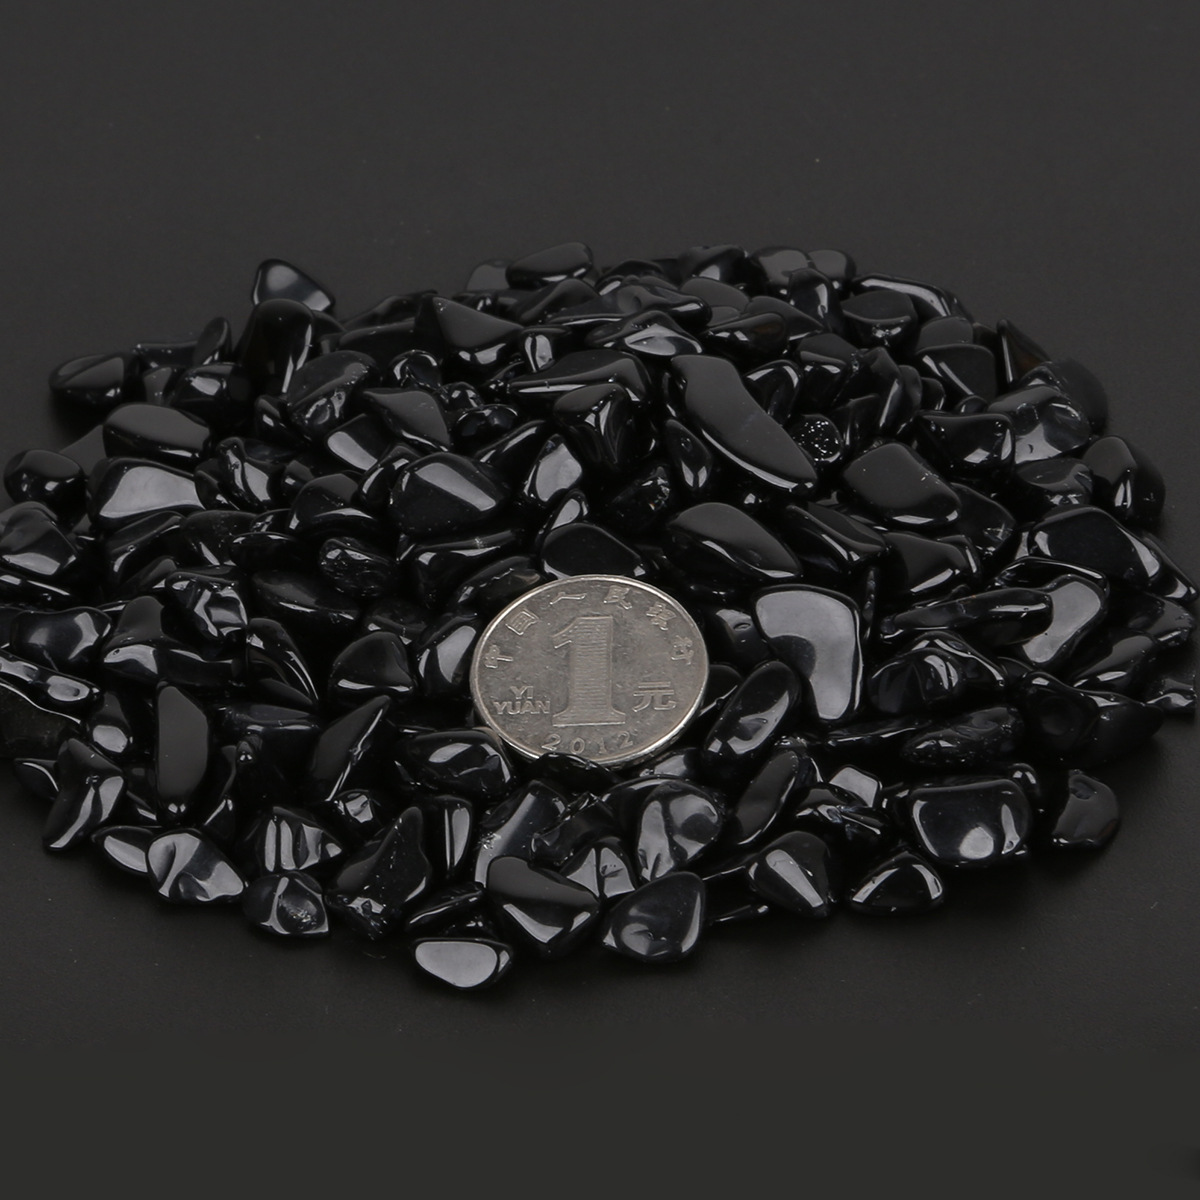 Black Obsidian about 7-9mm